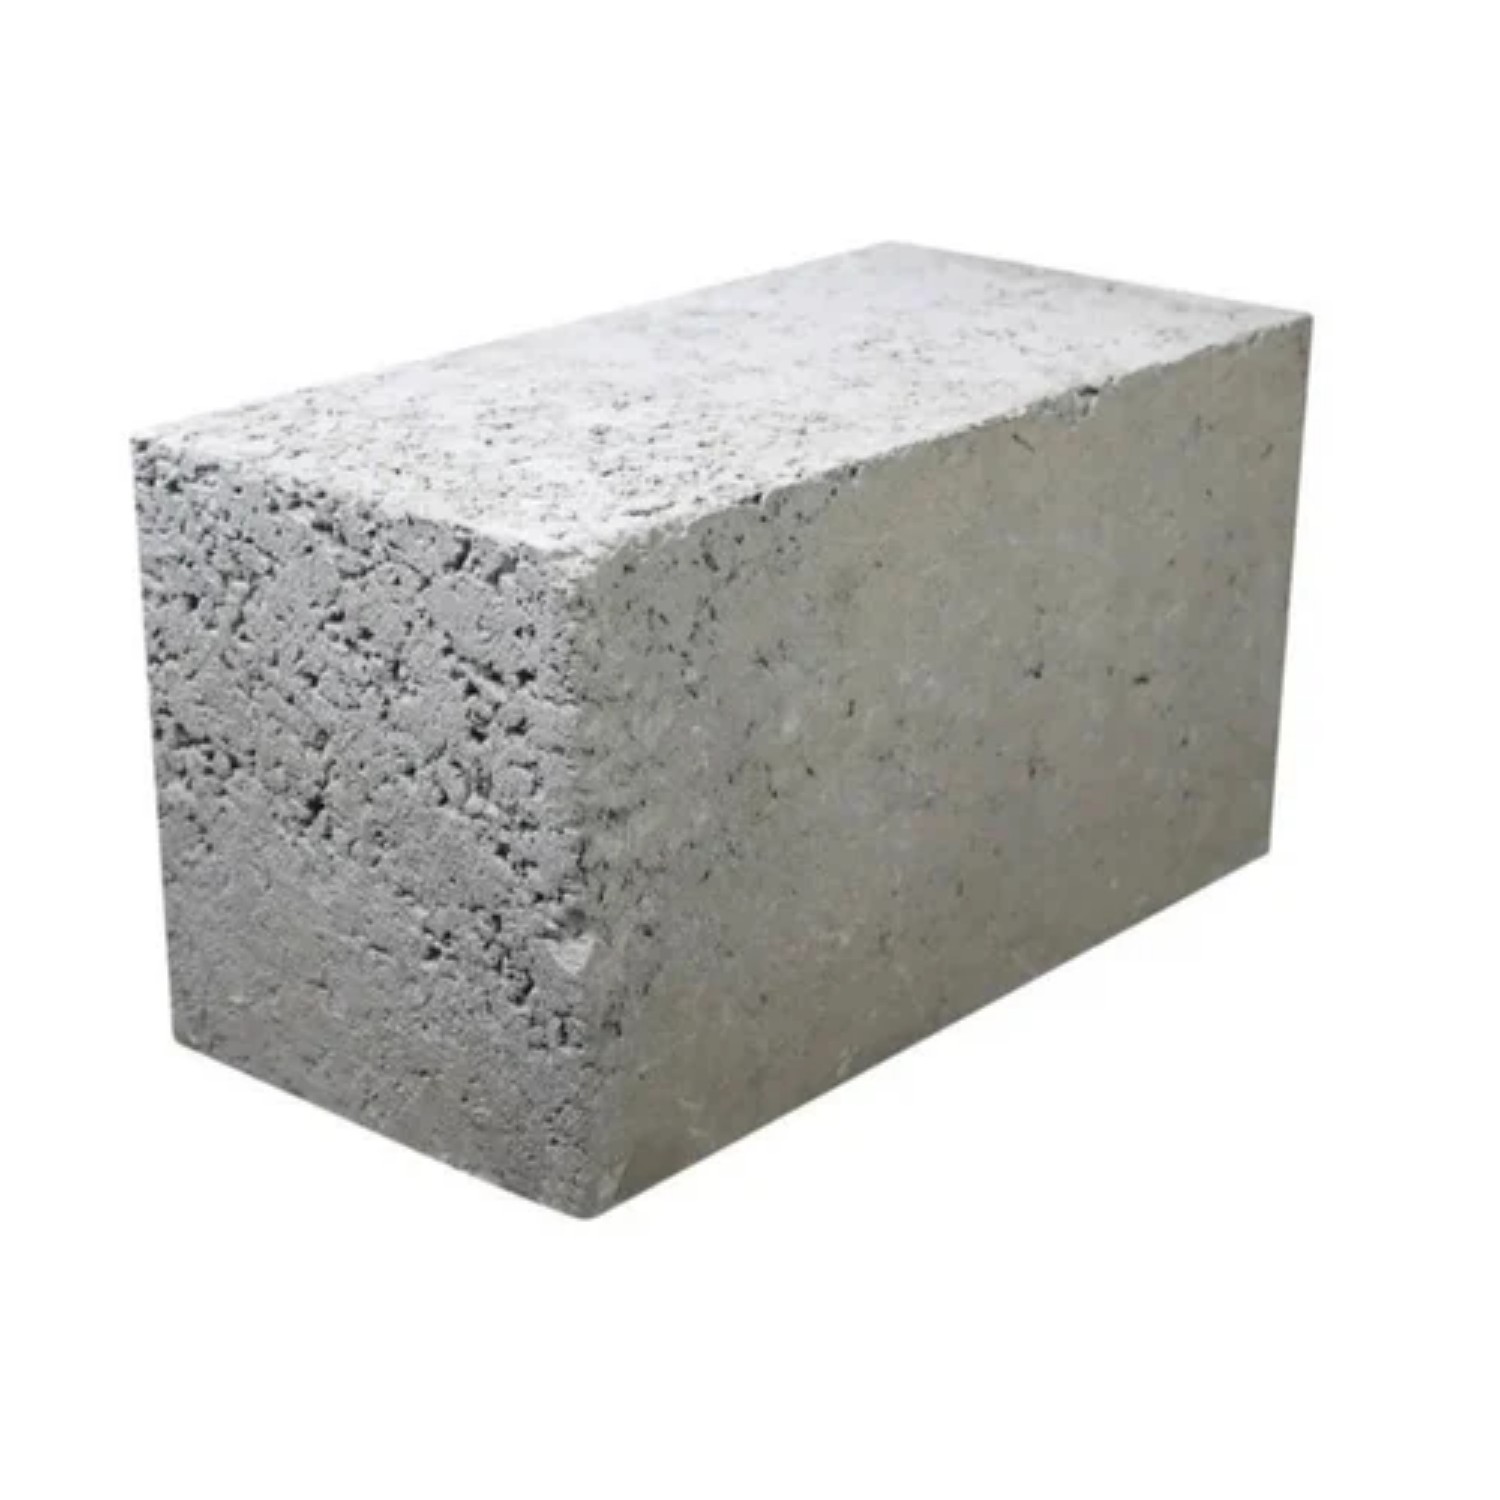 Brunda 7.5 N/mm2 Solid Concrete Blocks 16 in 4 in 8 in_0